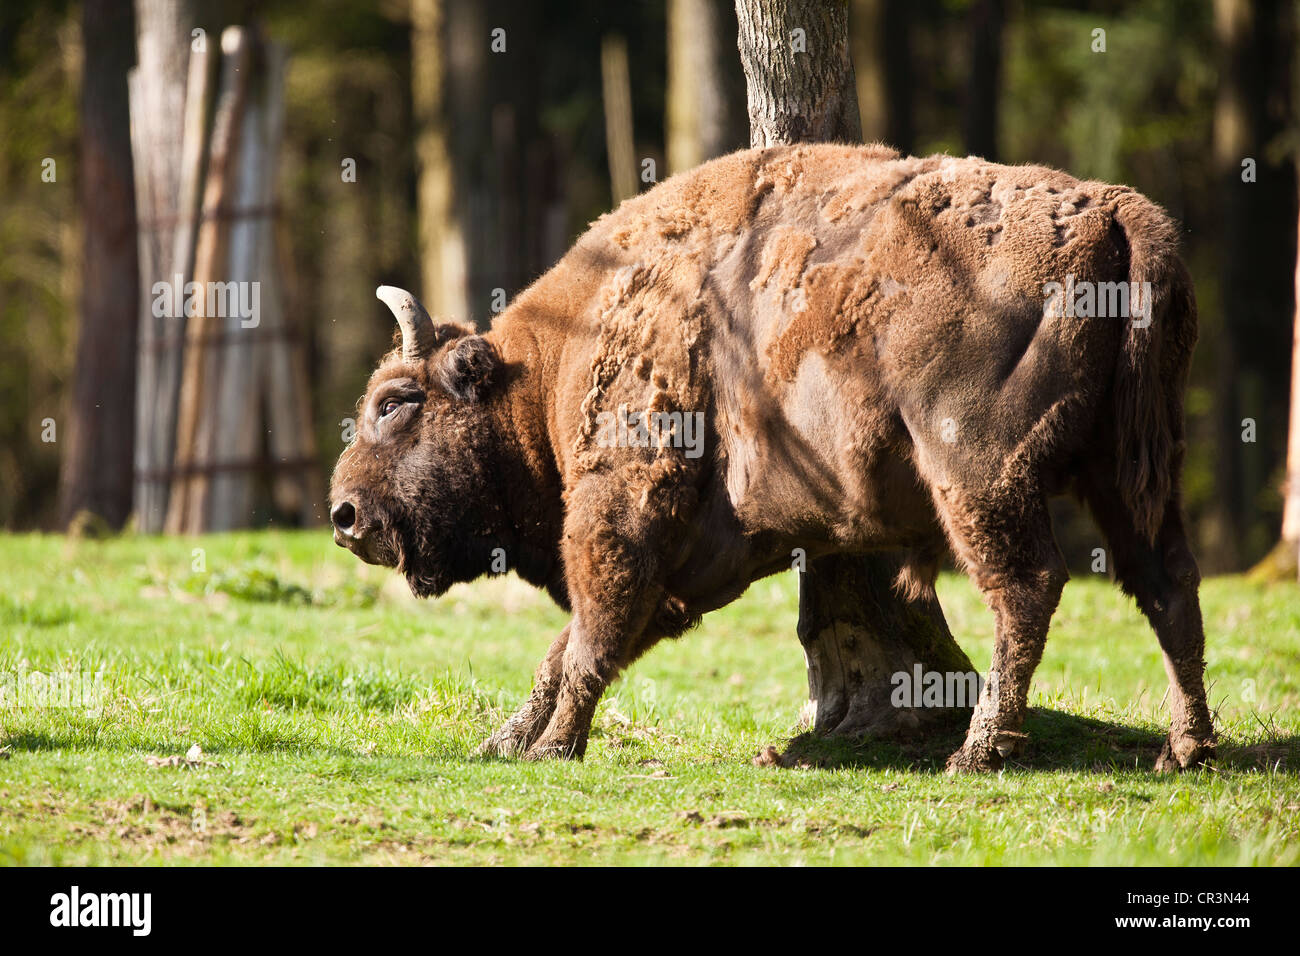 Wisent or European bison (Bison bonasus) Stock Photo